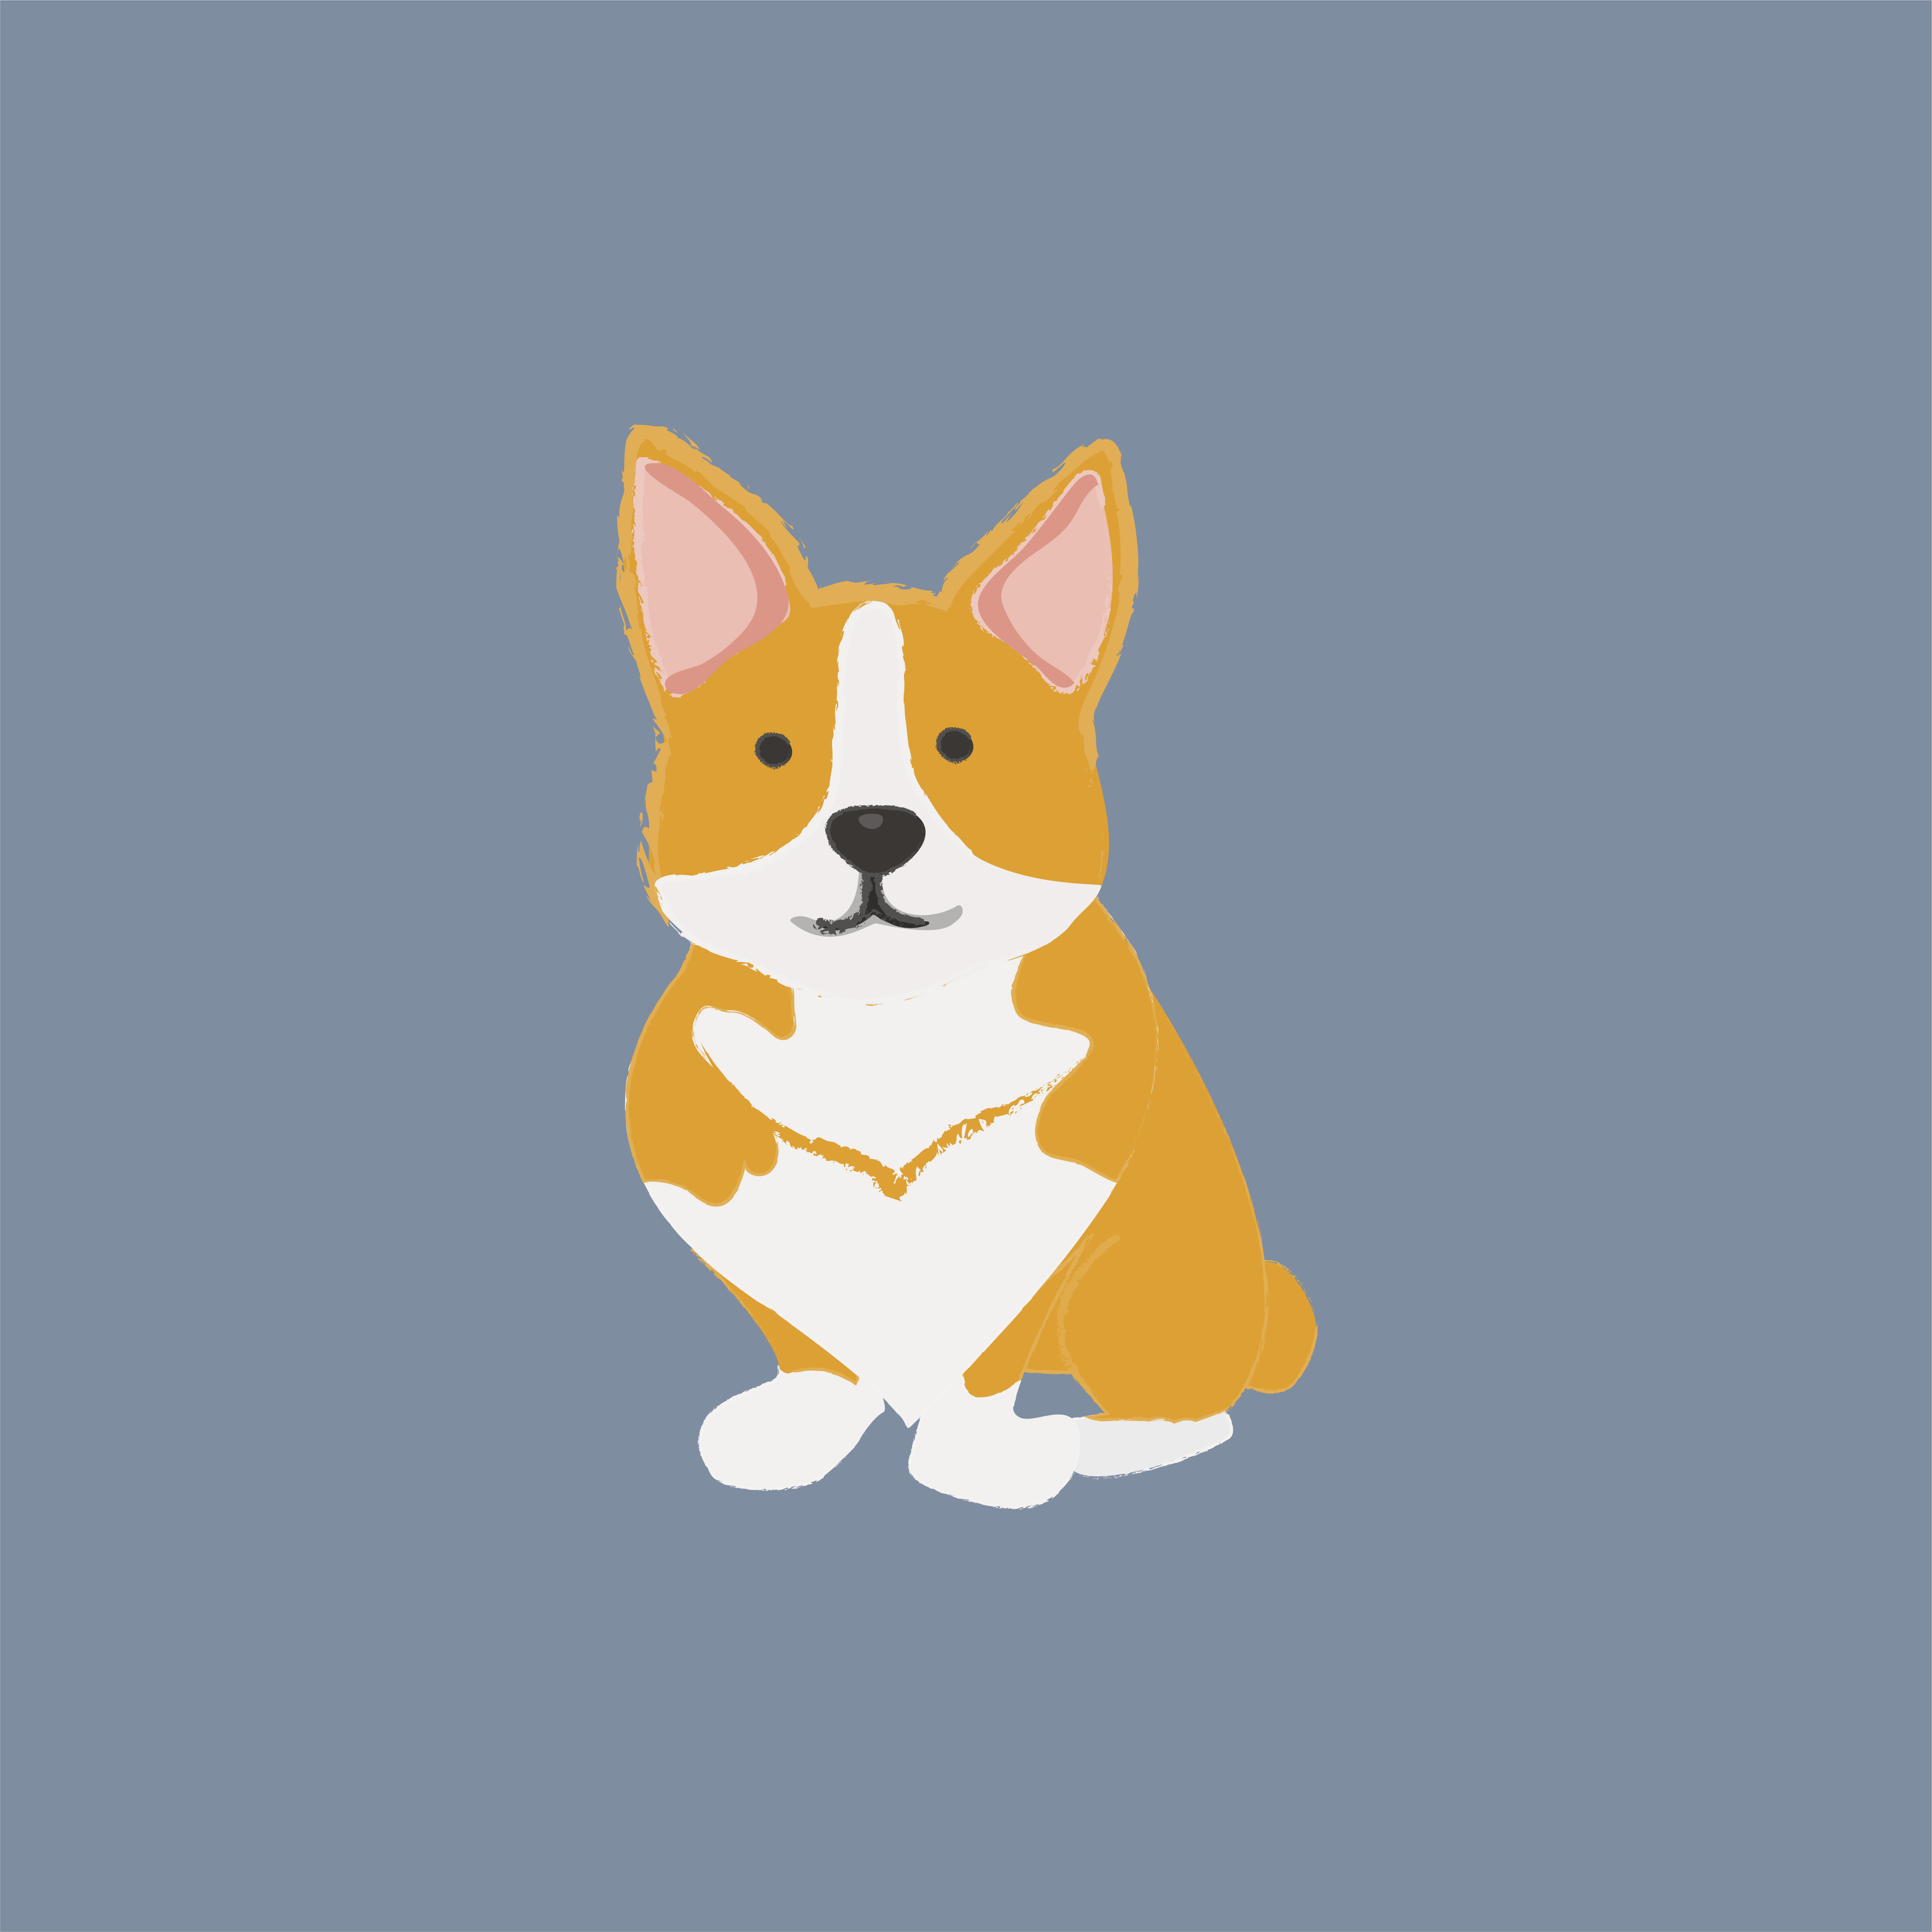 Cute illustration of a dog Download Free Vectors